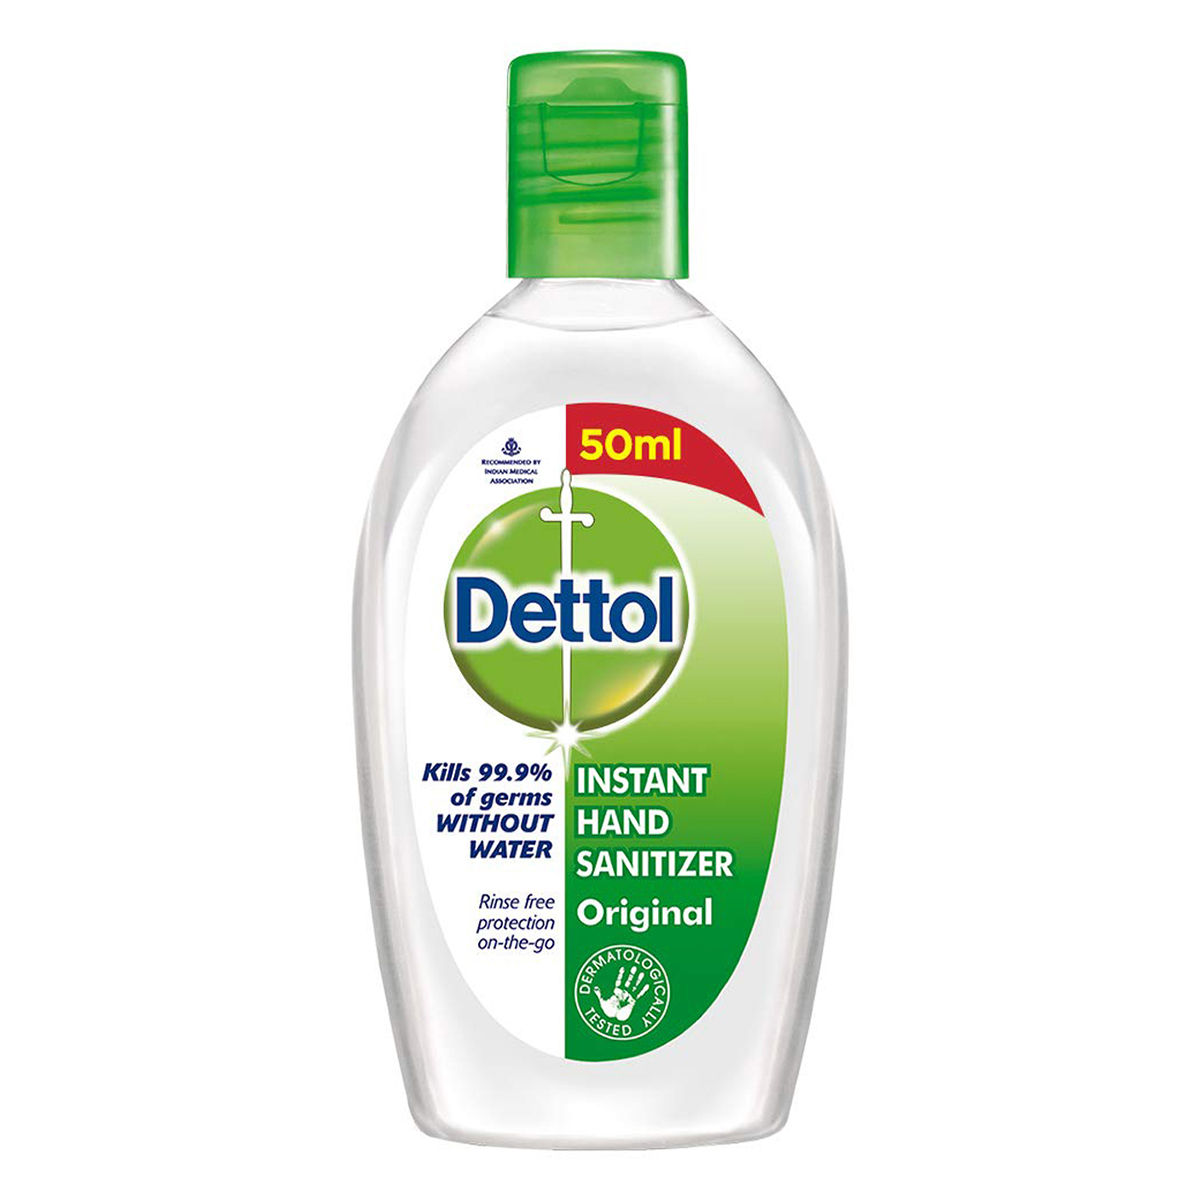 Buy Dettol Original Instant Hand Sanitizer, 50 ml Online